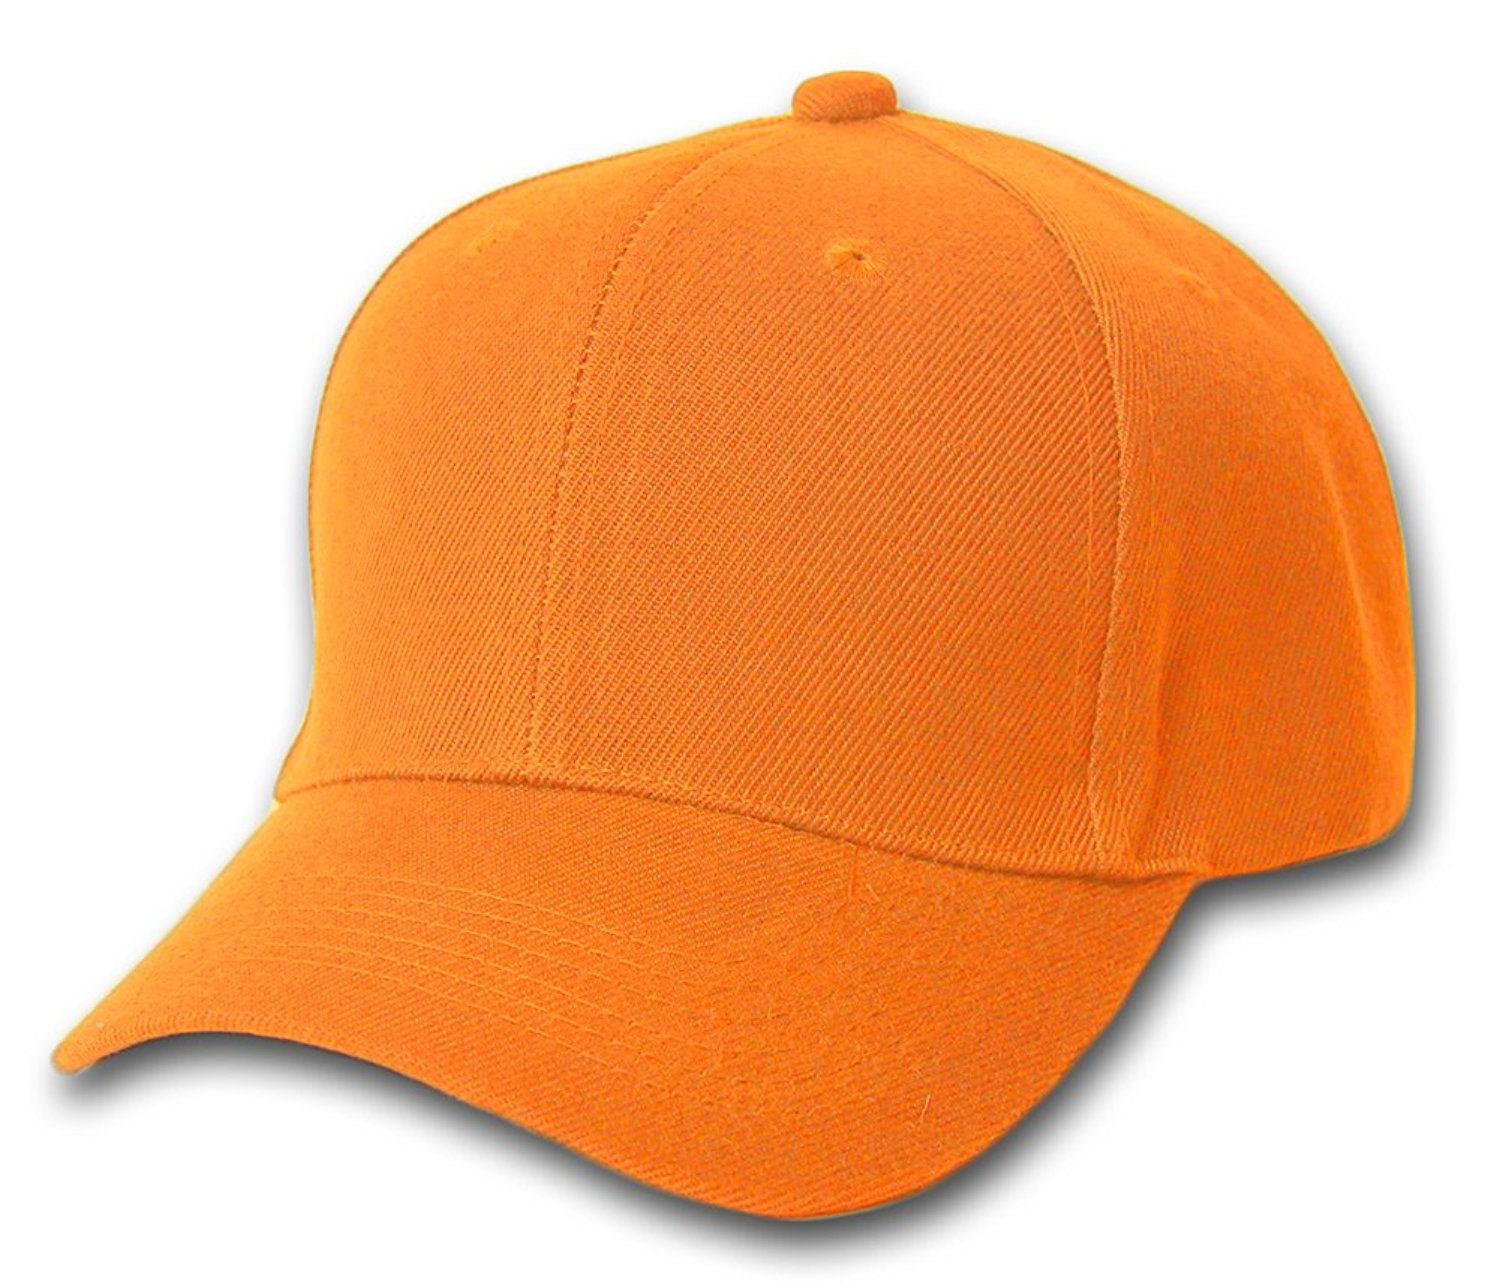 Orange hat photo